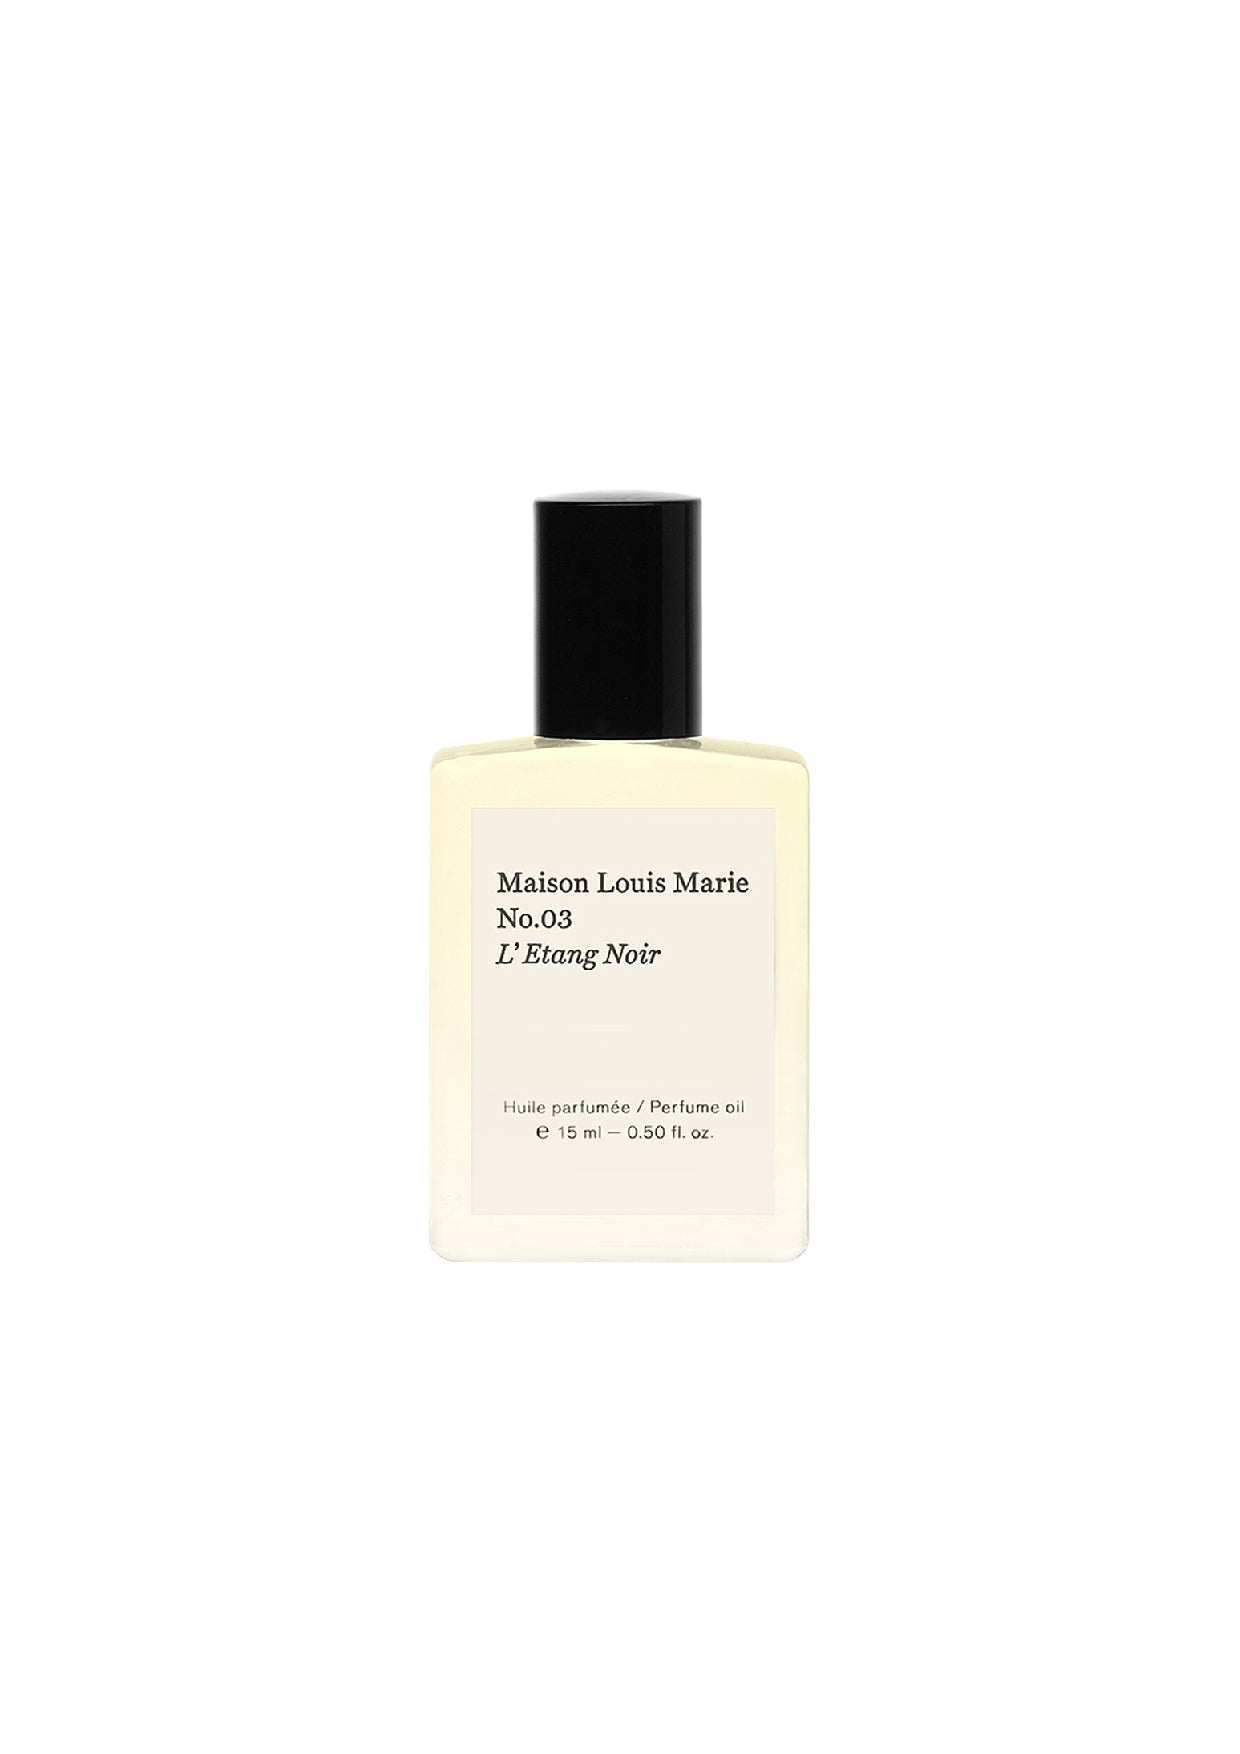 Maison Louis Marie No. 03 L'etang Noir Perfume Oil, 15 ml In